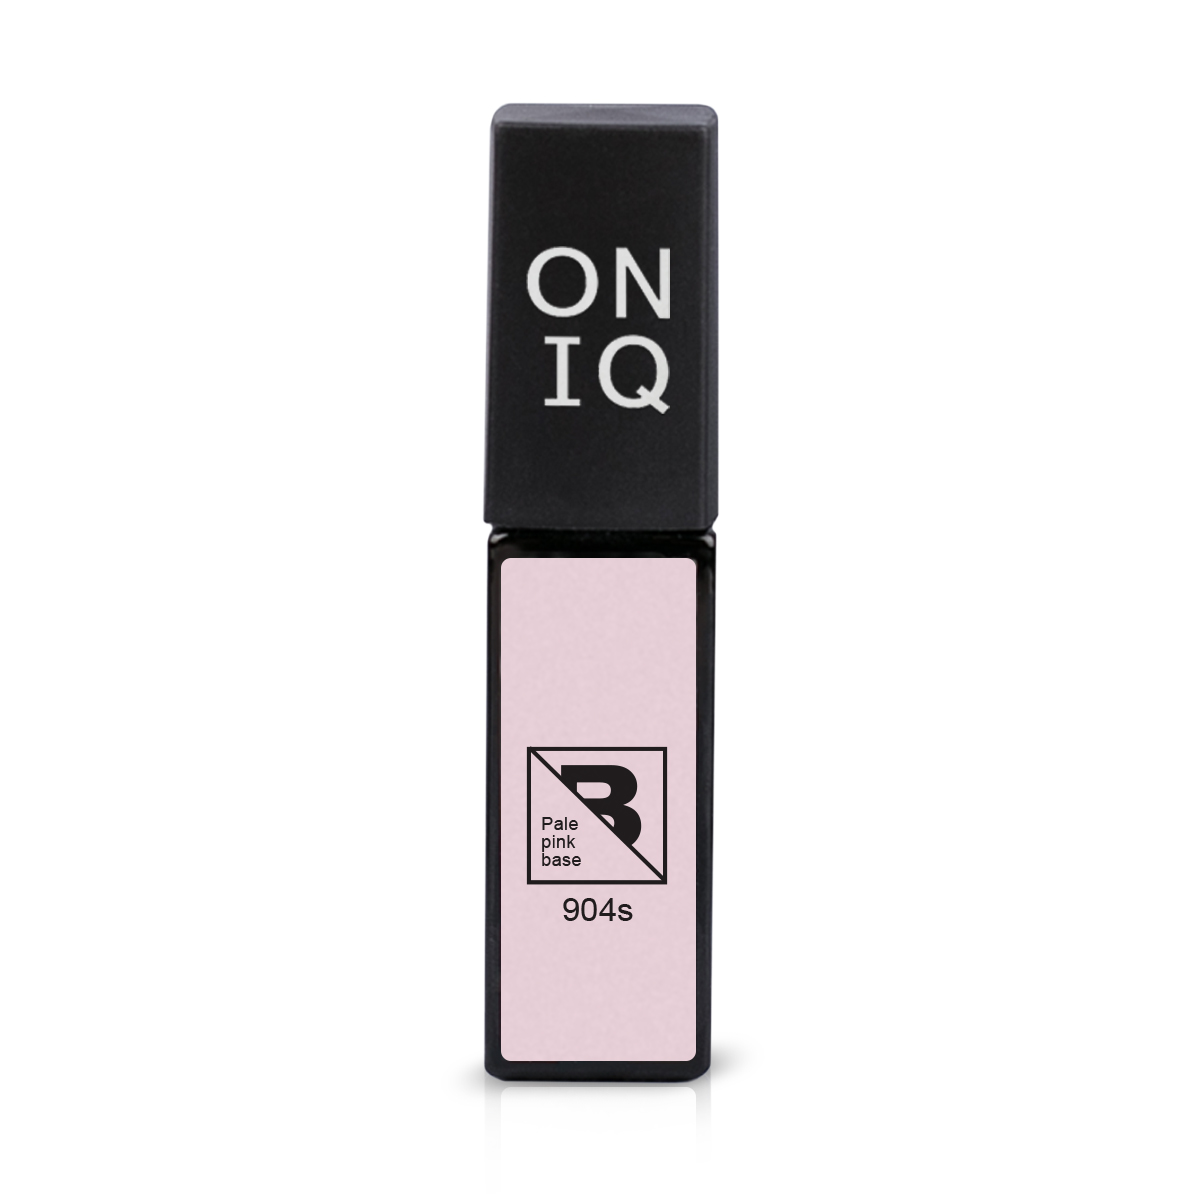 ONIQ Покрытие базовое, бледно-розовое полупрозрачное / Pale 